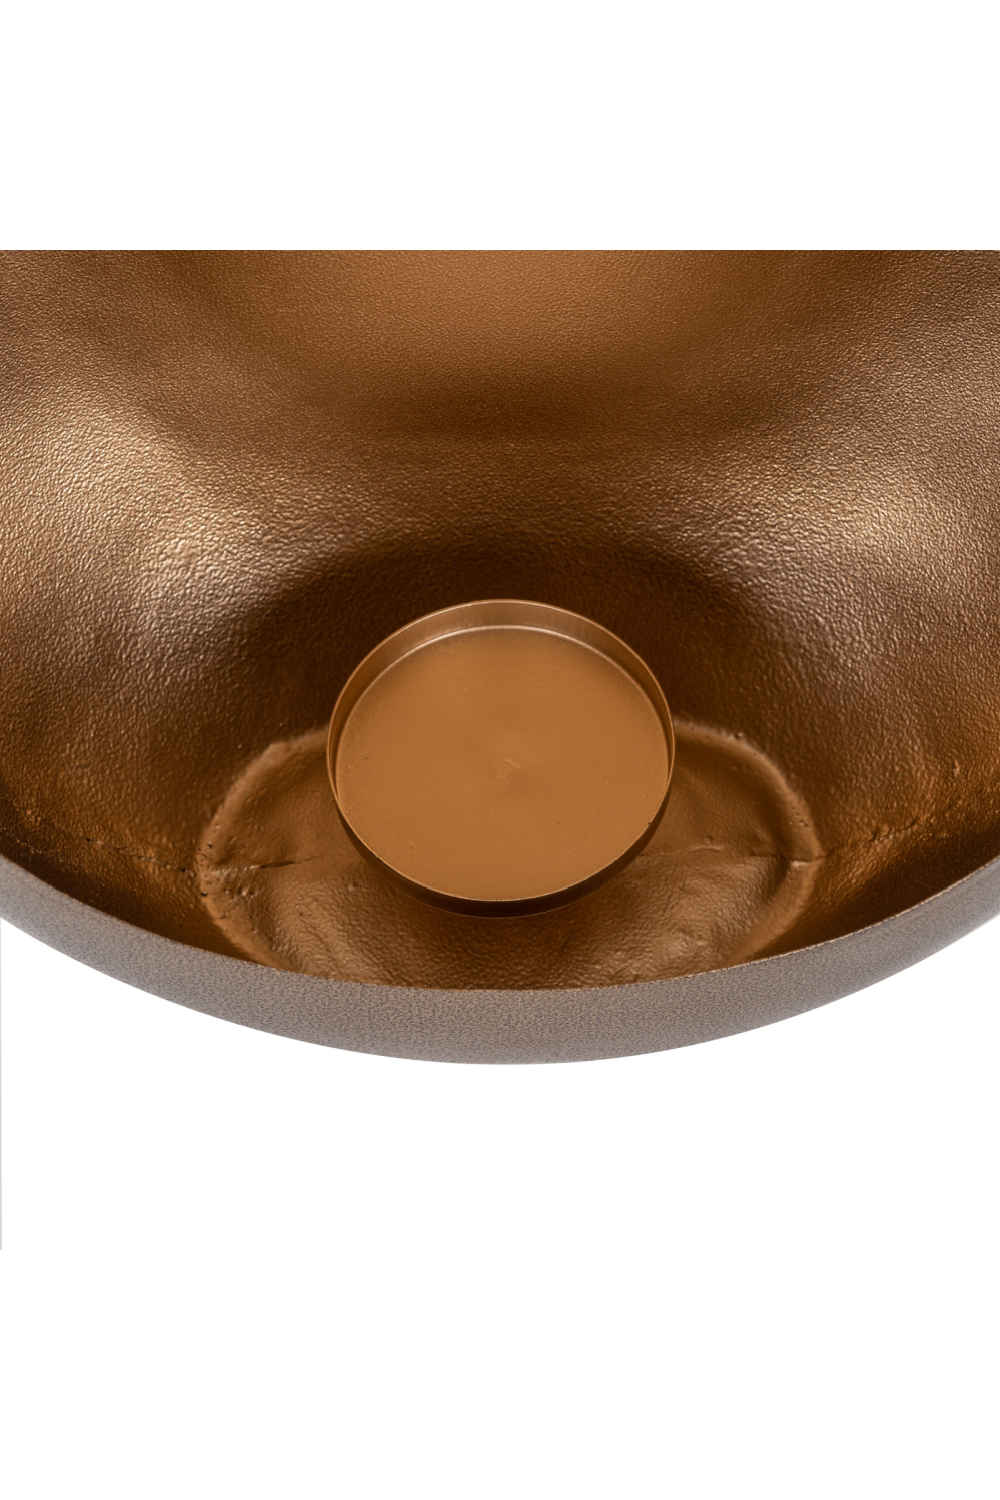 Bronze Gold Oval Candlestick M | OROA Xemm | OROA.com